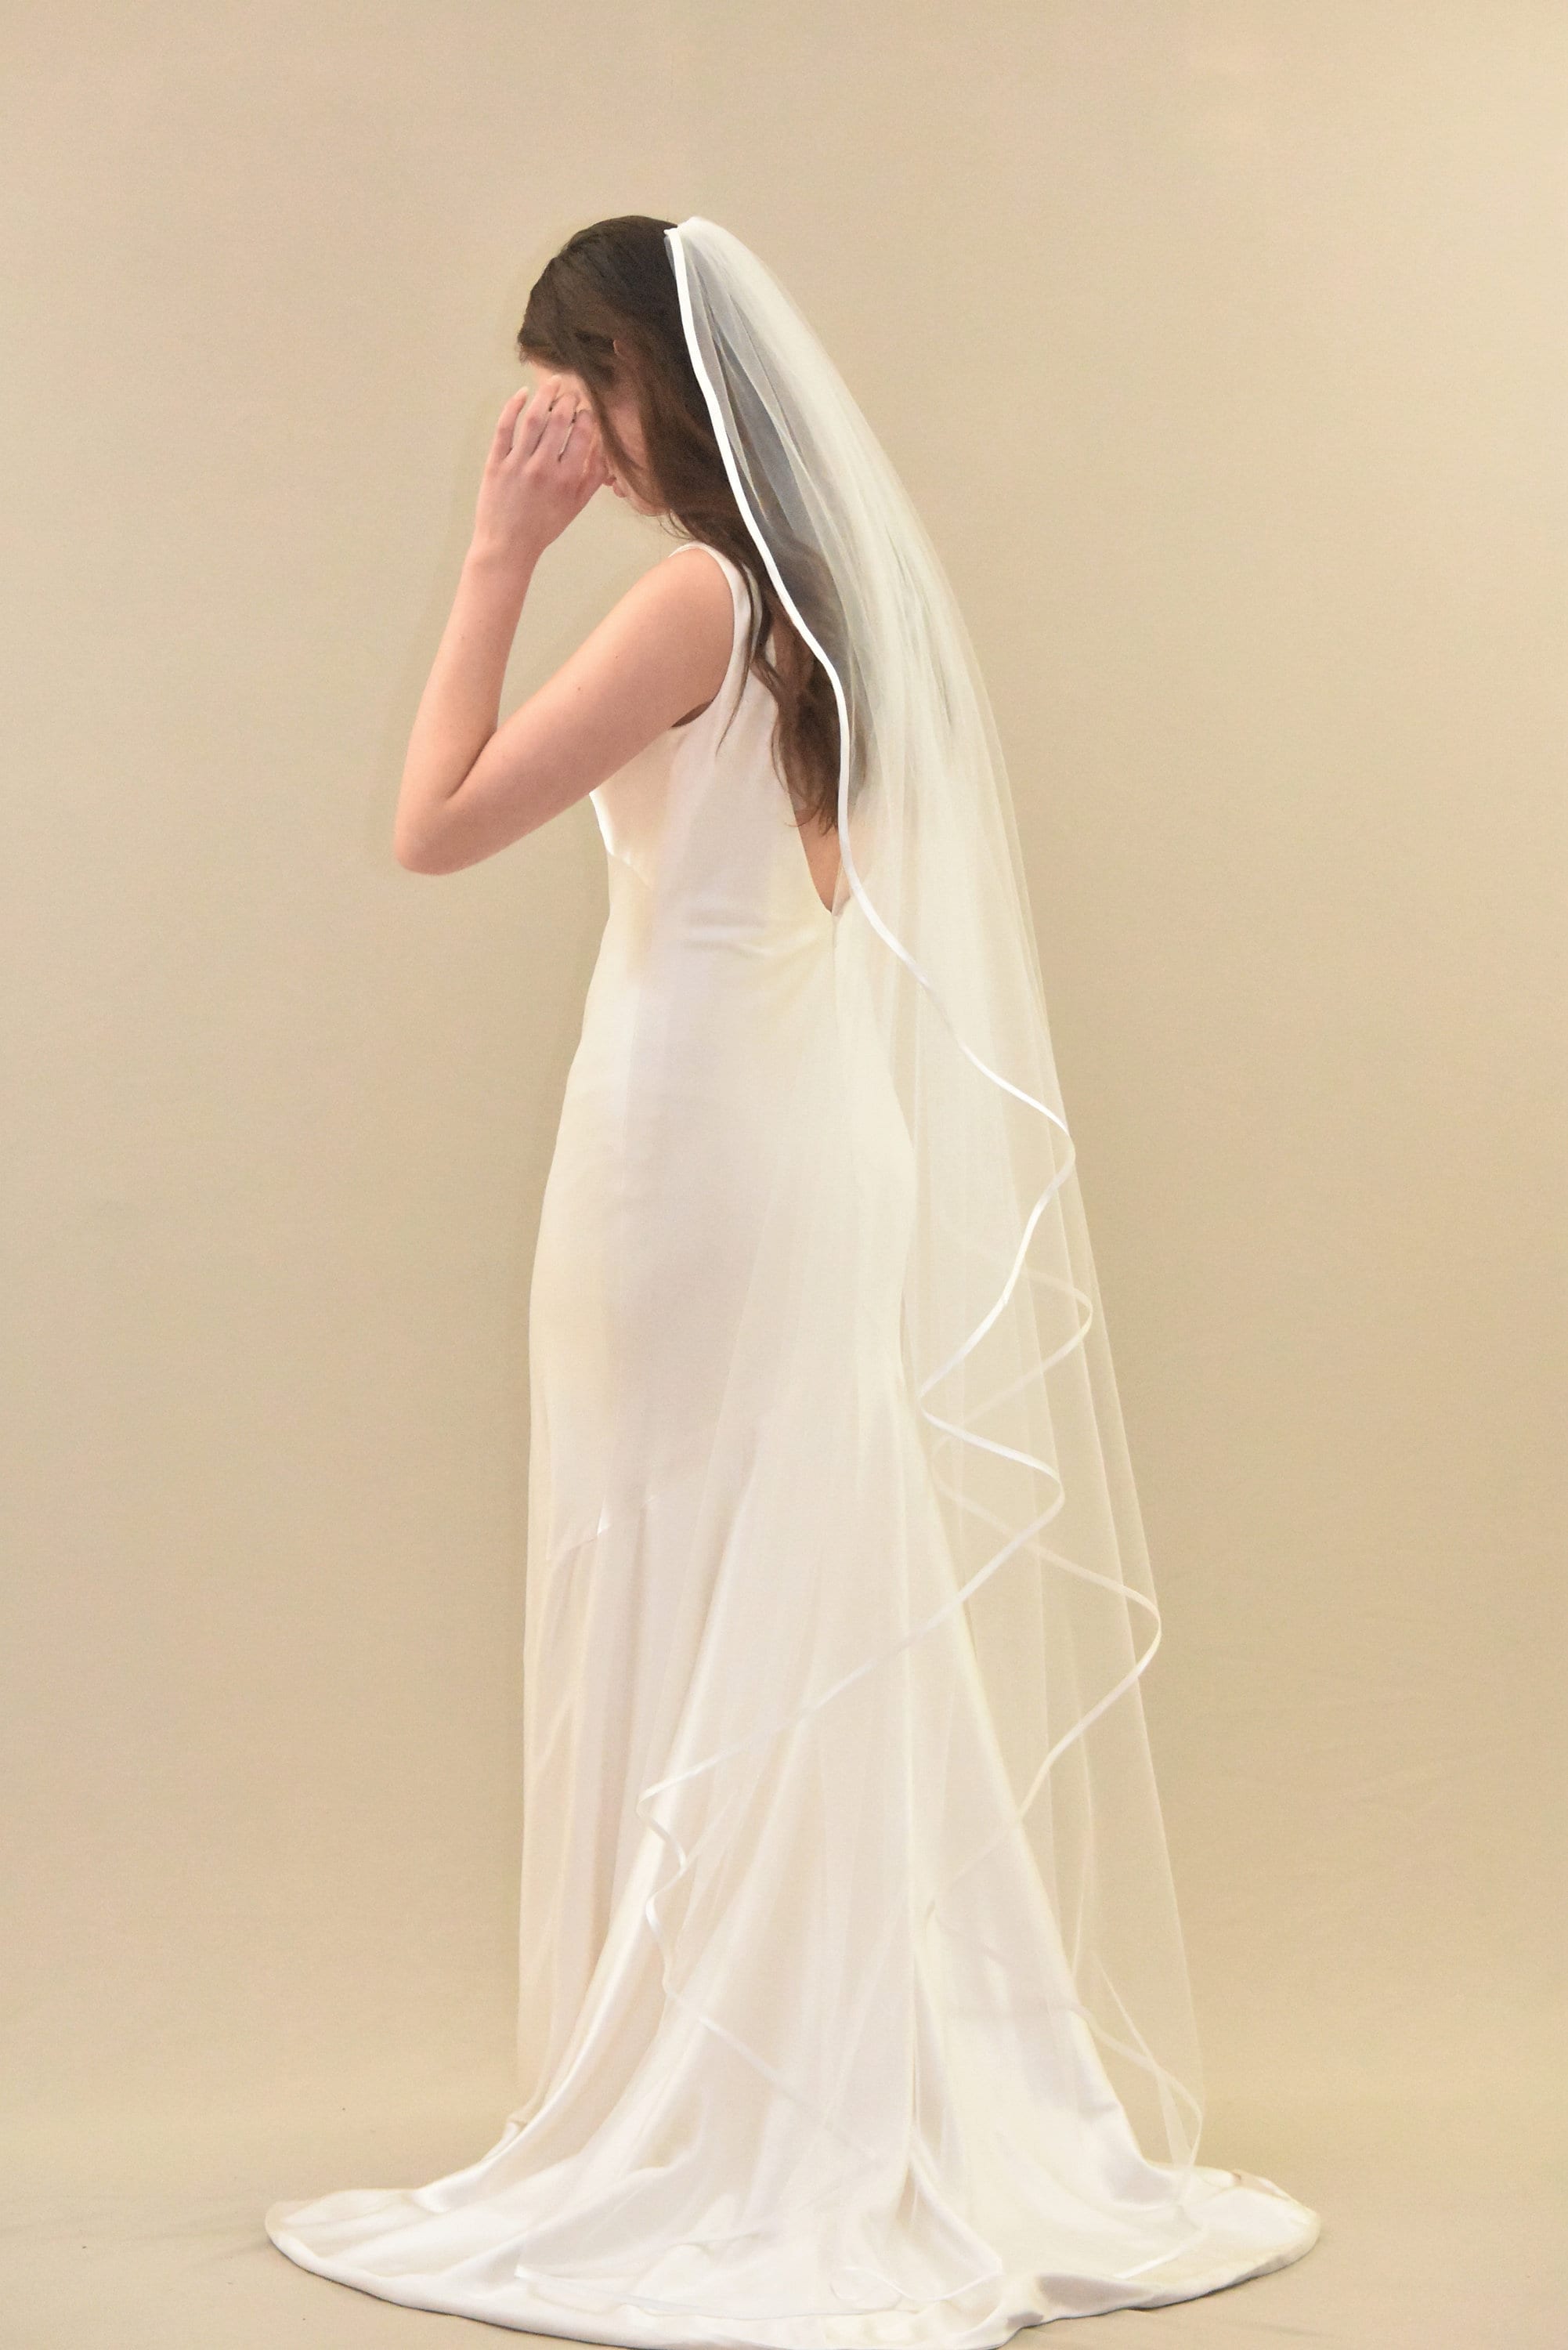 Style TG1015L060: Waltz Length Angel Cut Veil with Sequined Lace Appliqués